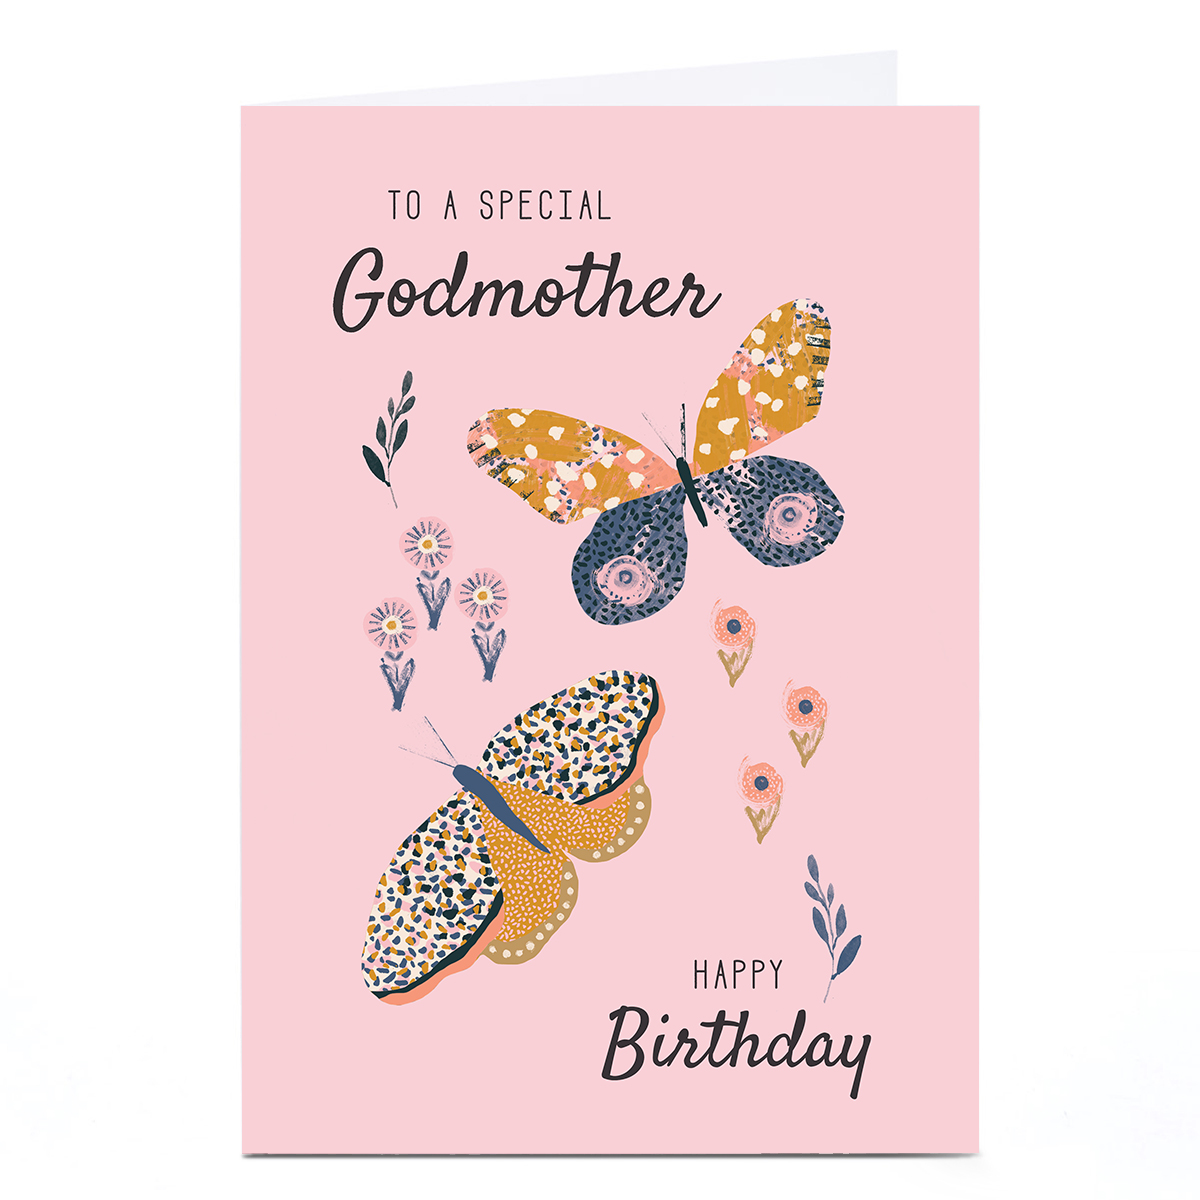 Personalised Rebecca Prinn Birthday Card - Butterflies & Flowers Godmother